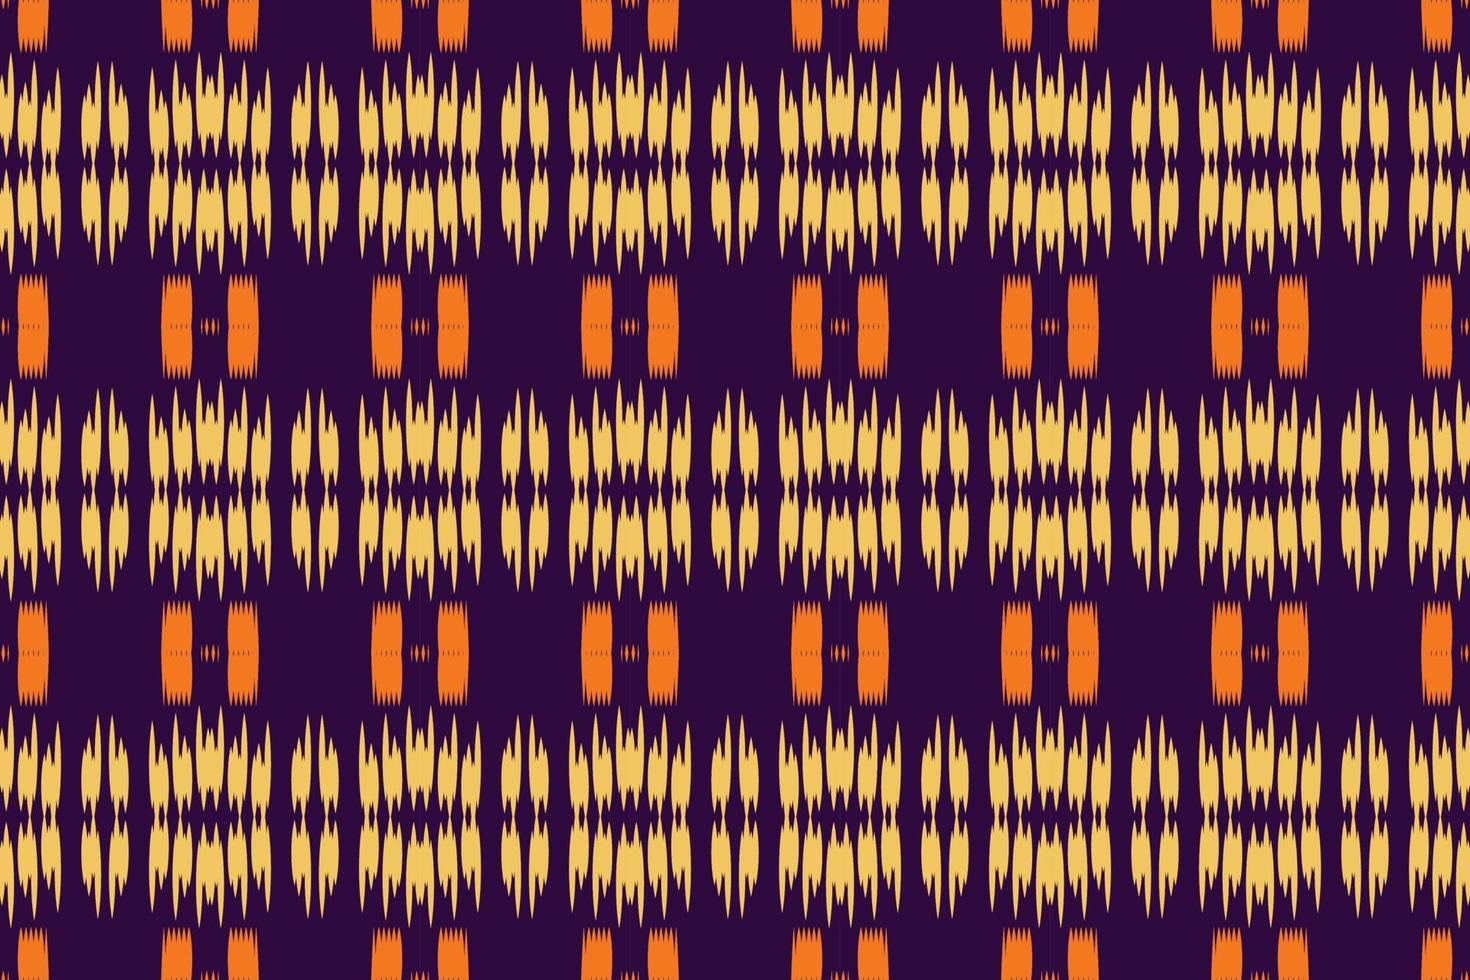 africano ikat tessuto tribale attraversare Borneo scandinavo batik boemo struttura digitale vettore design per Stampa saree Kurti tessuto spazzola simboli campioni